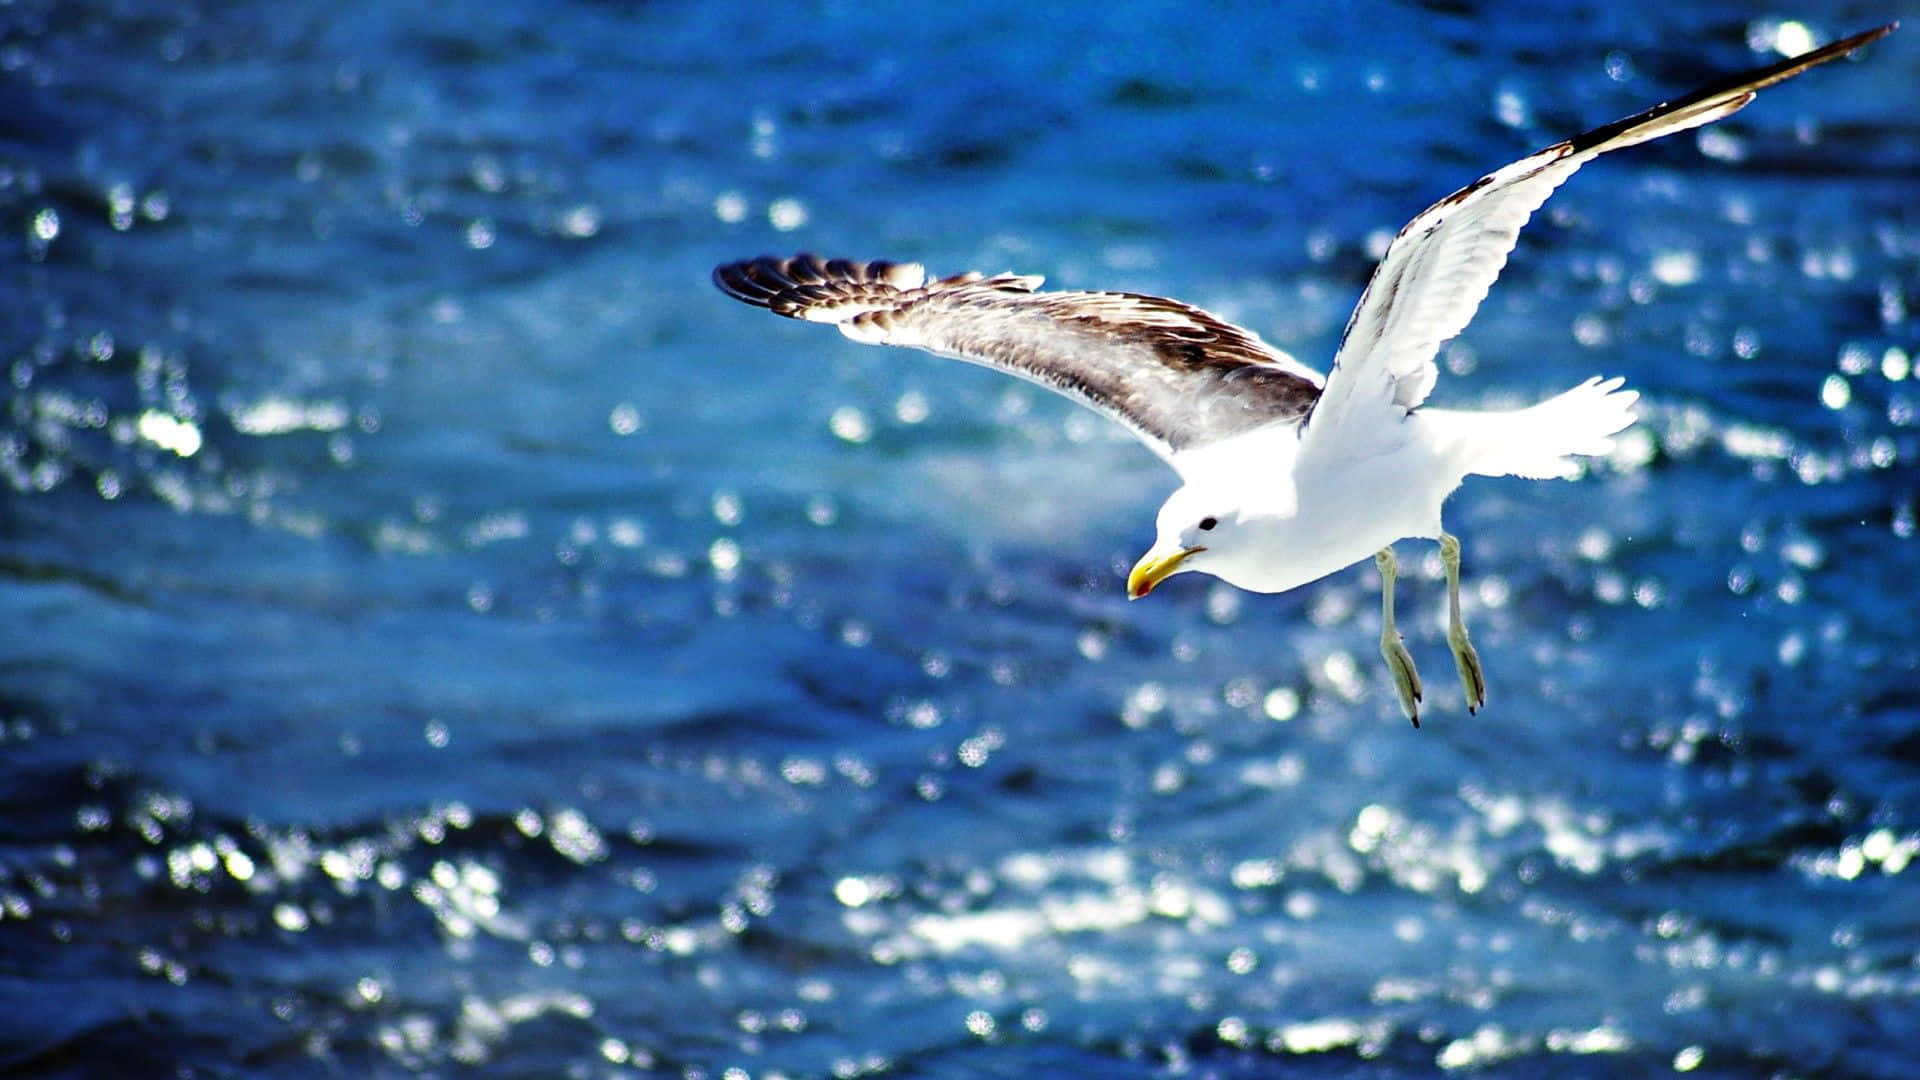 Caption: Majestic Seagull Soaring Across A Sunlit Sky